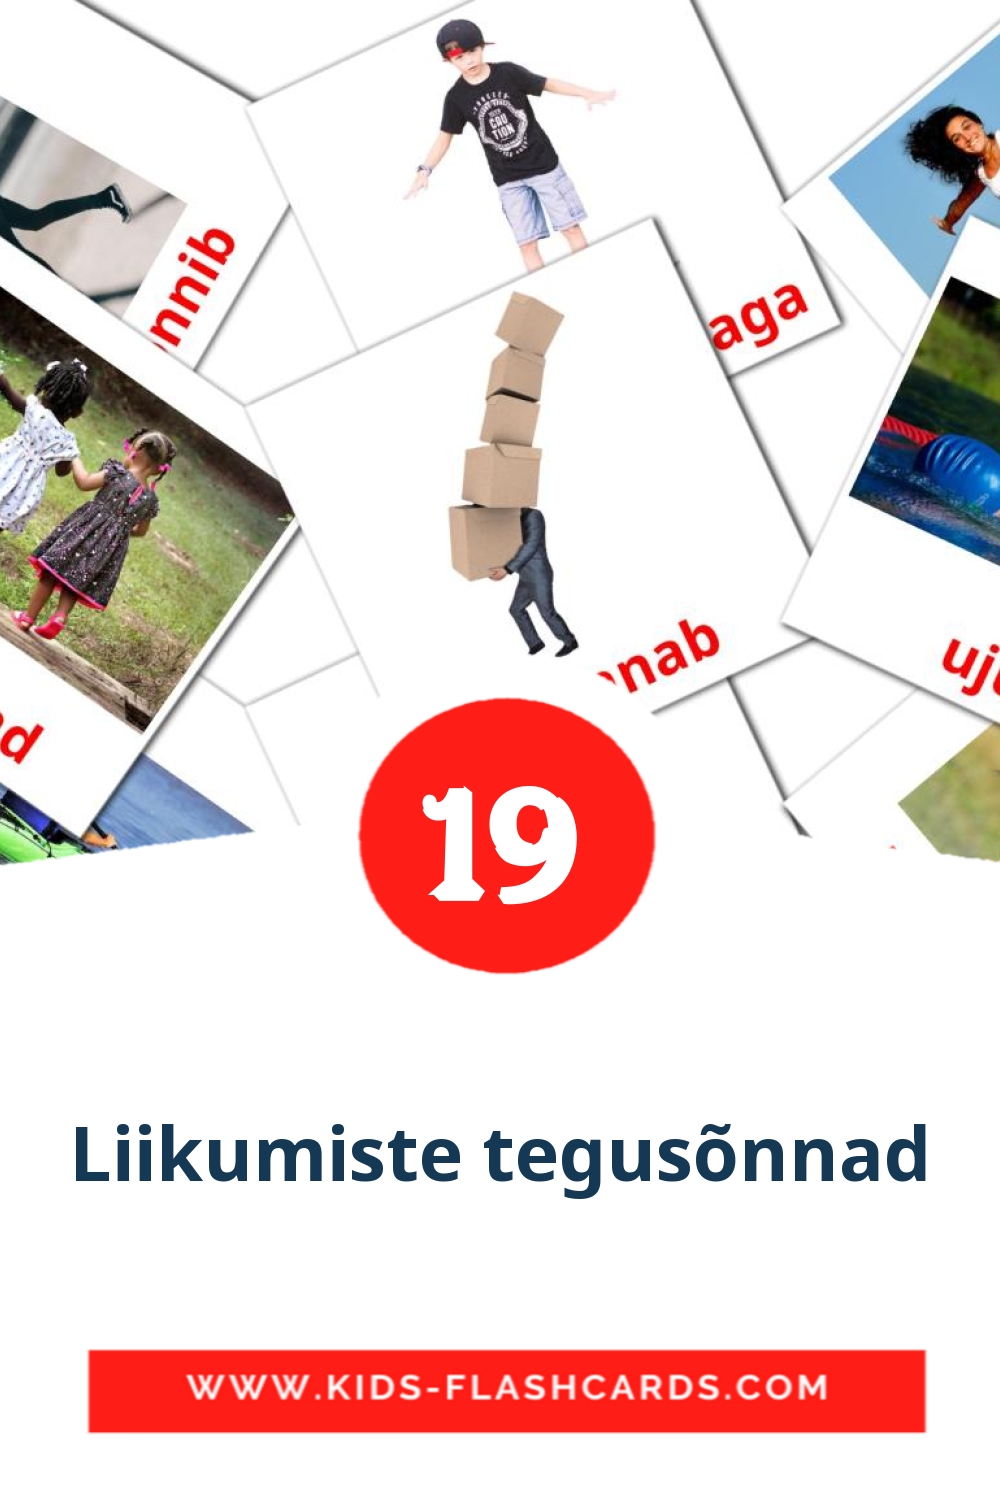 19 carte illustrate di Liikumiste tegusõnnad per la scuola materna in estone